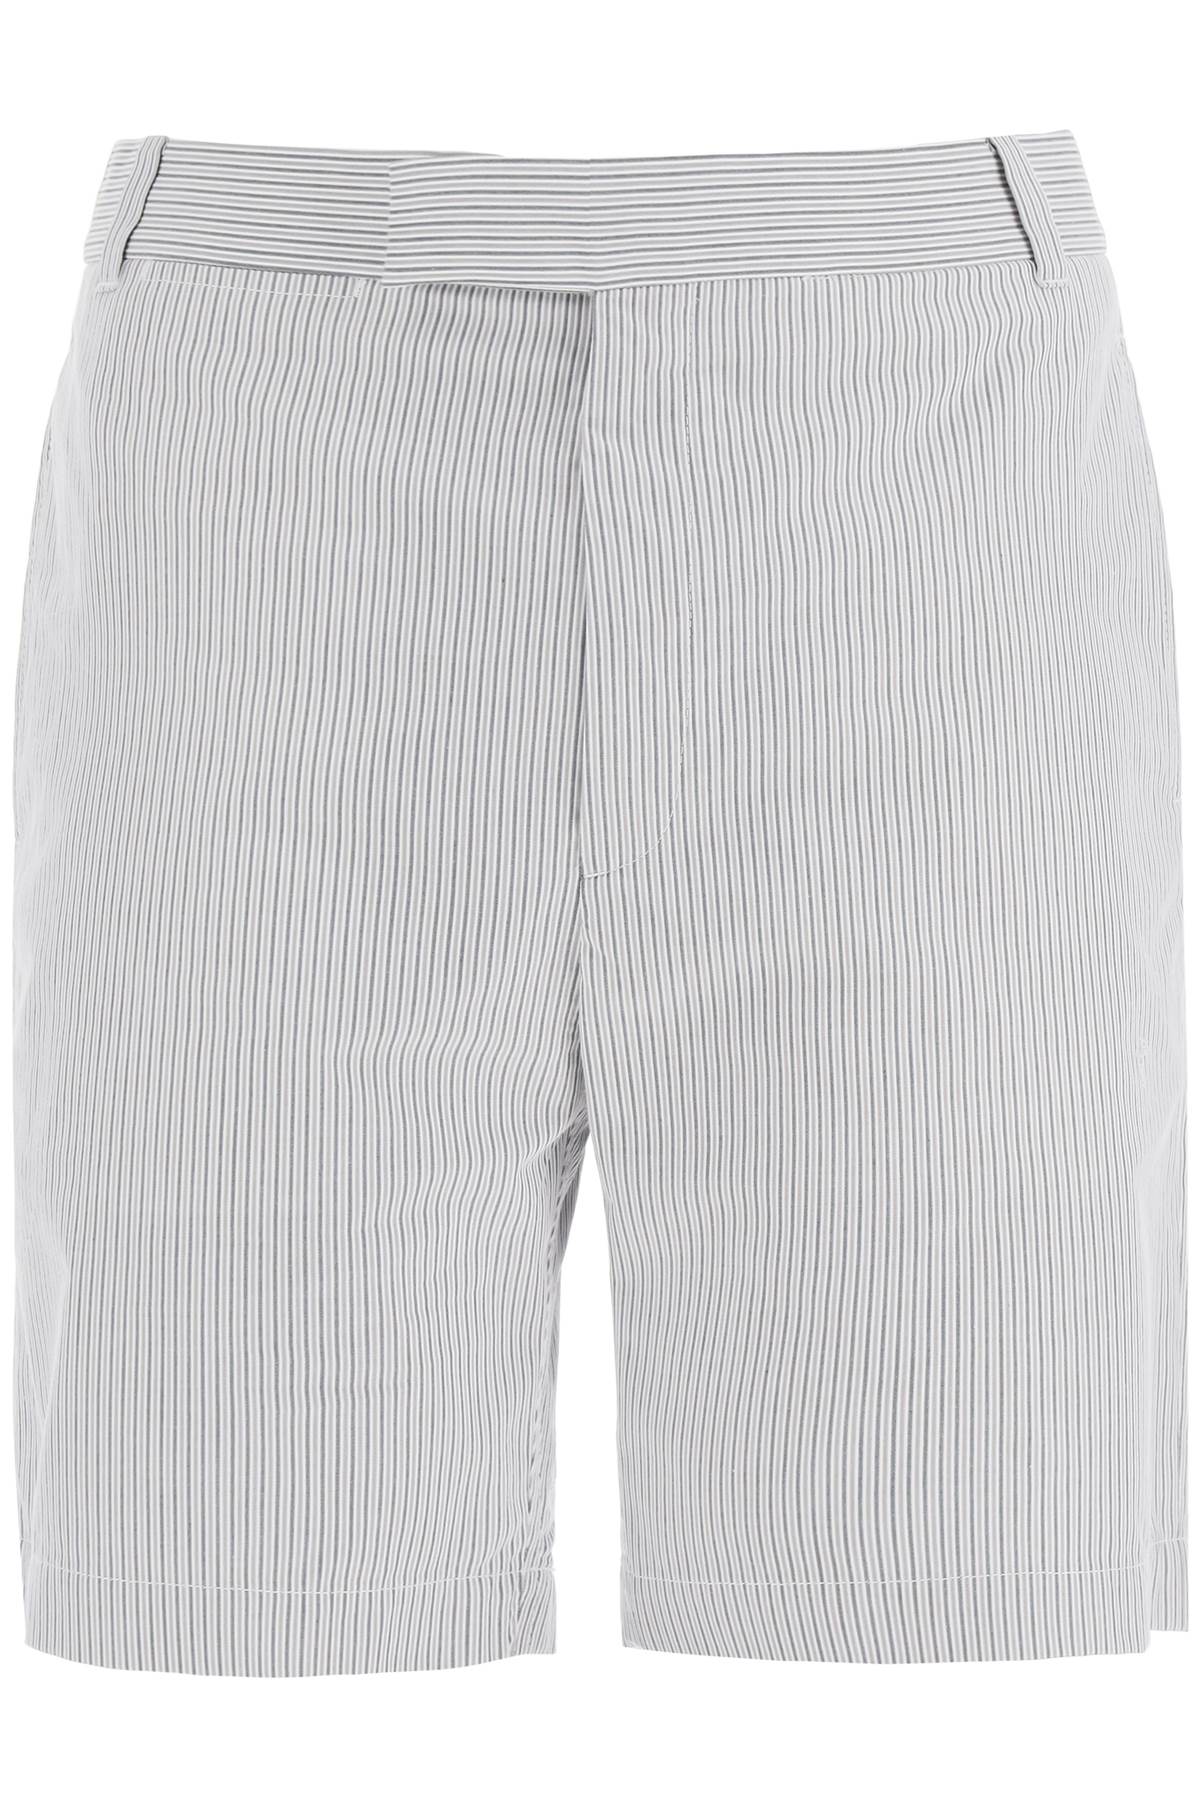 Shop Thom Browne Striped Cotton Bermuda Shorts For Men In Grey